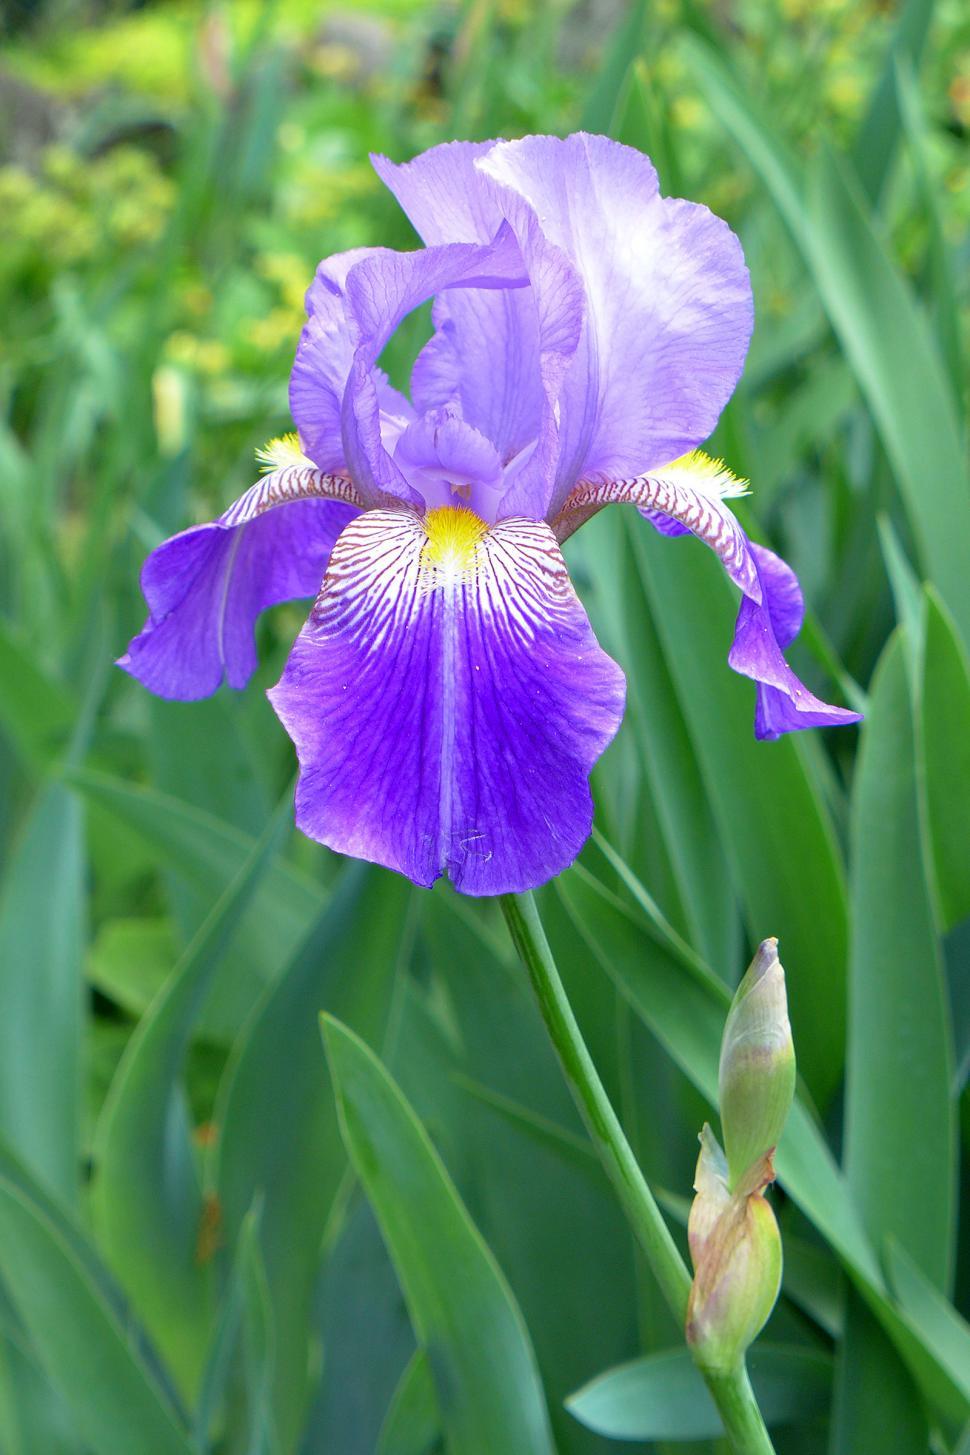 Free Image of Purple Iris Flower and Bud 